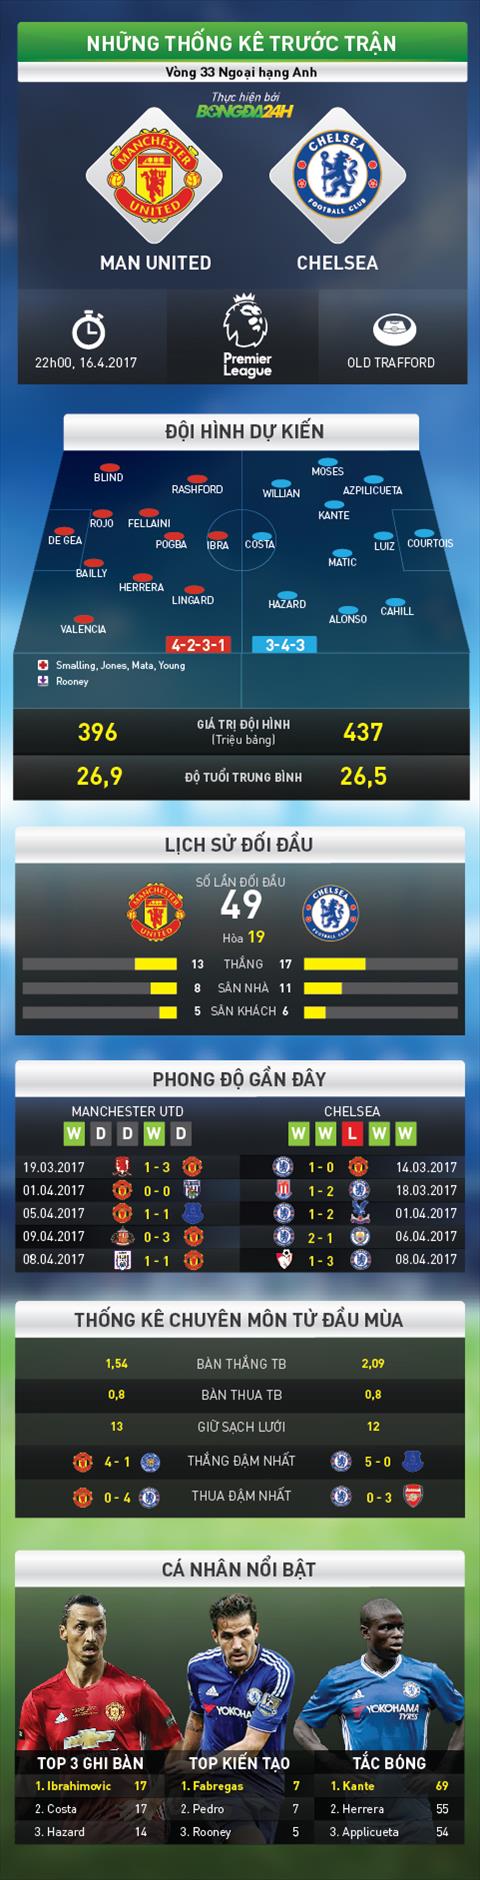 Infographic Nhung thong tin dang chu y truoc tran dau MU vs Chelsea hinh anh